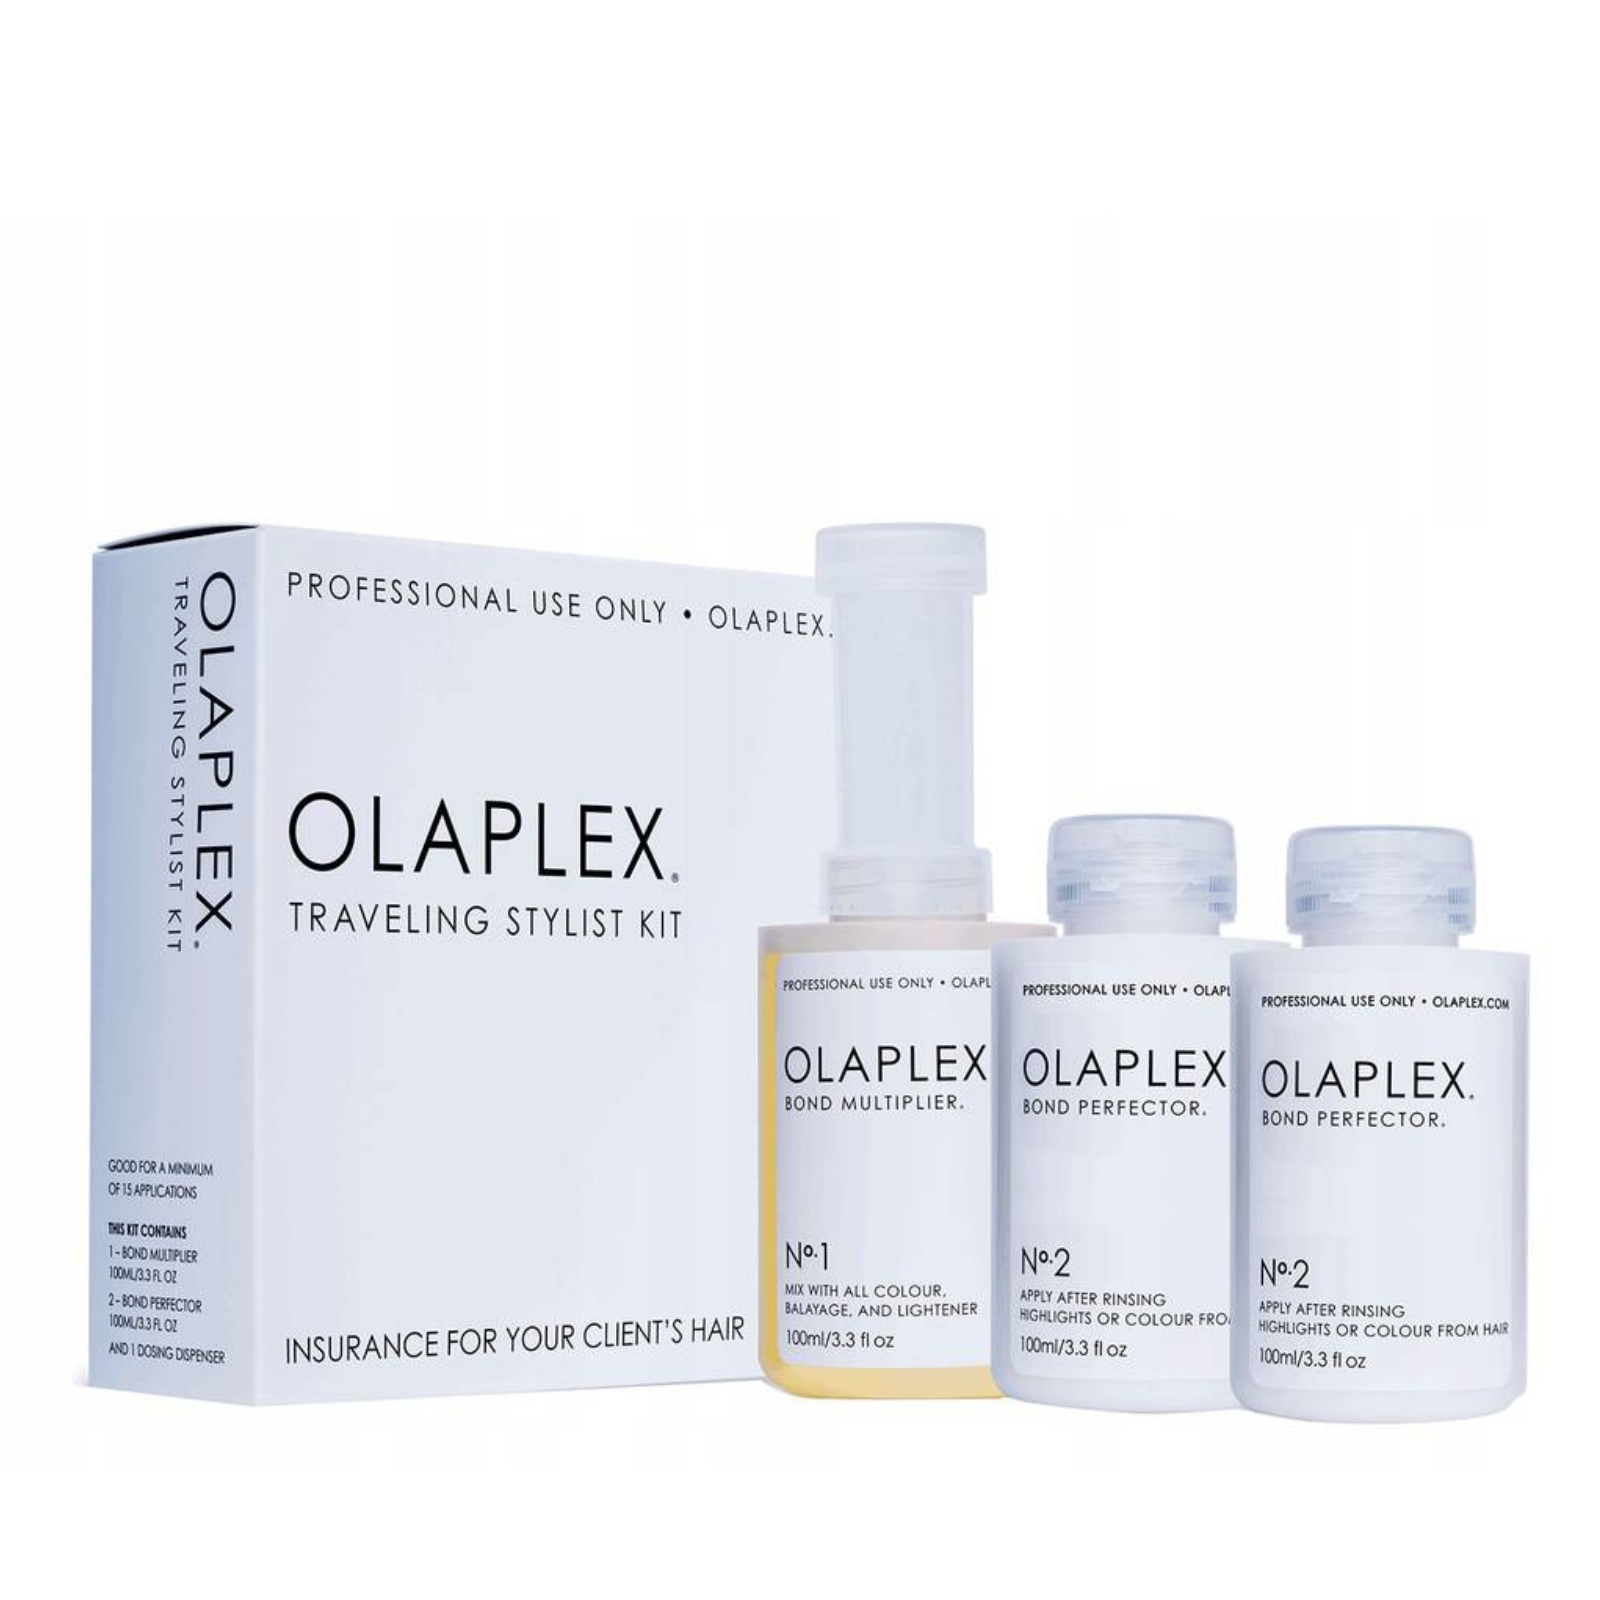 Hair restoration kit by Olaplex (Olaplex Travelling Stylist Kit)